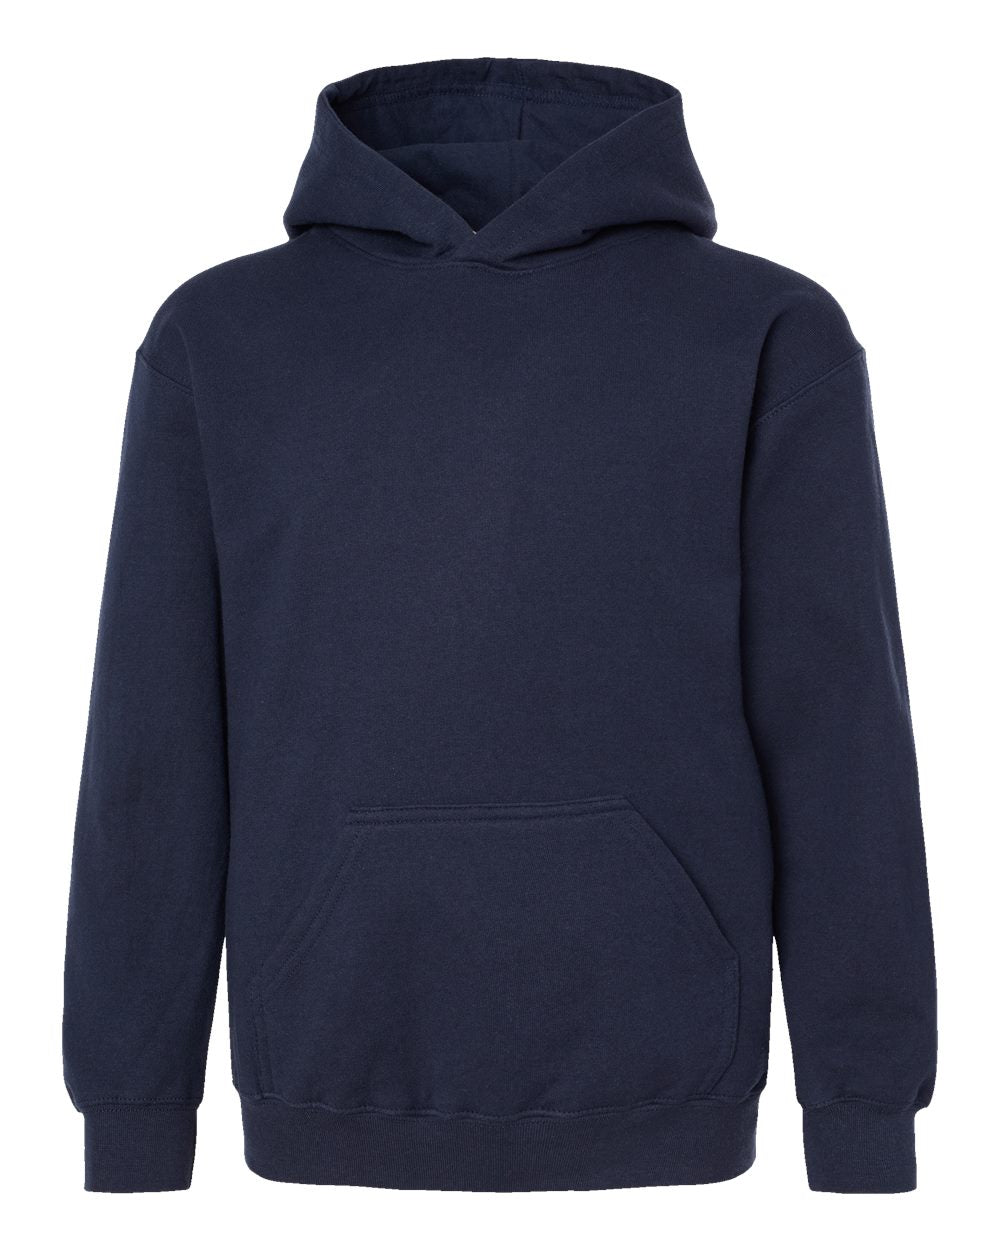 Tultex Youth Hooded Sweatshirt - Navy